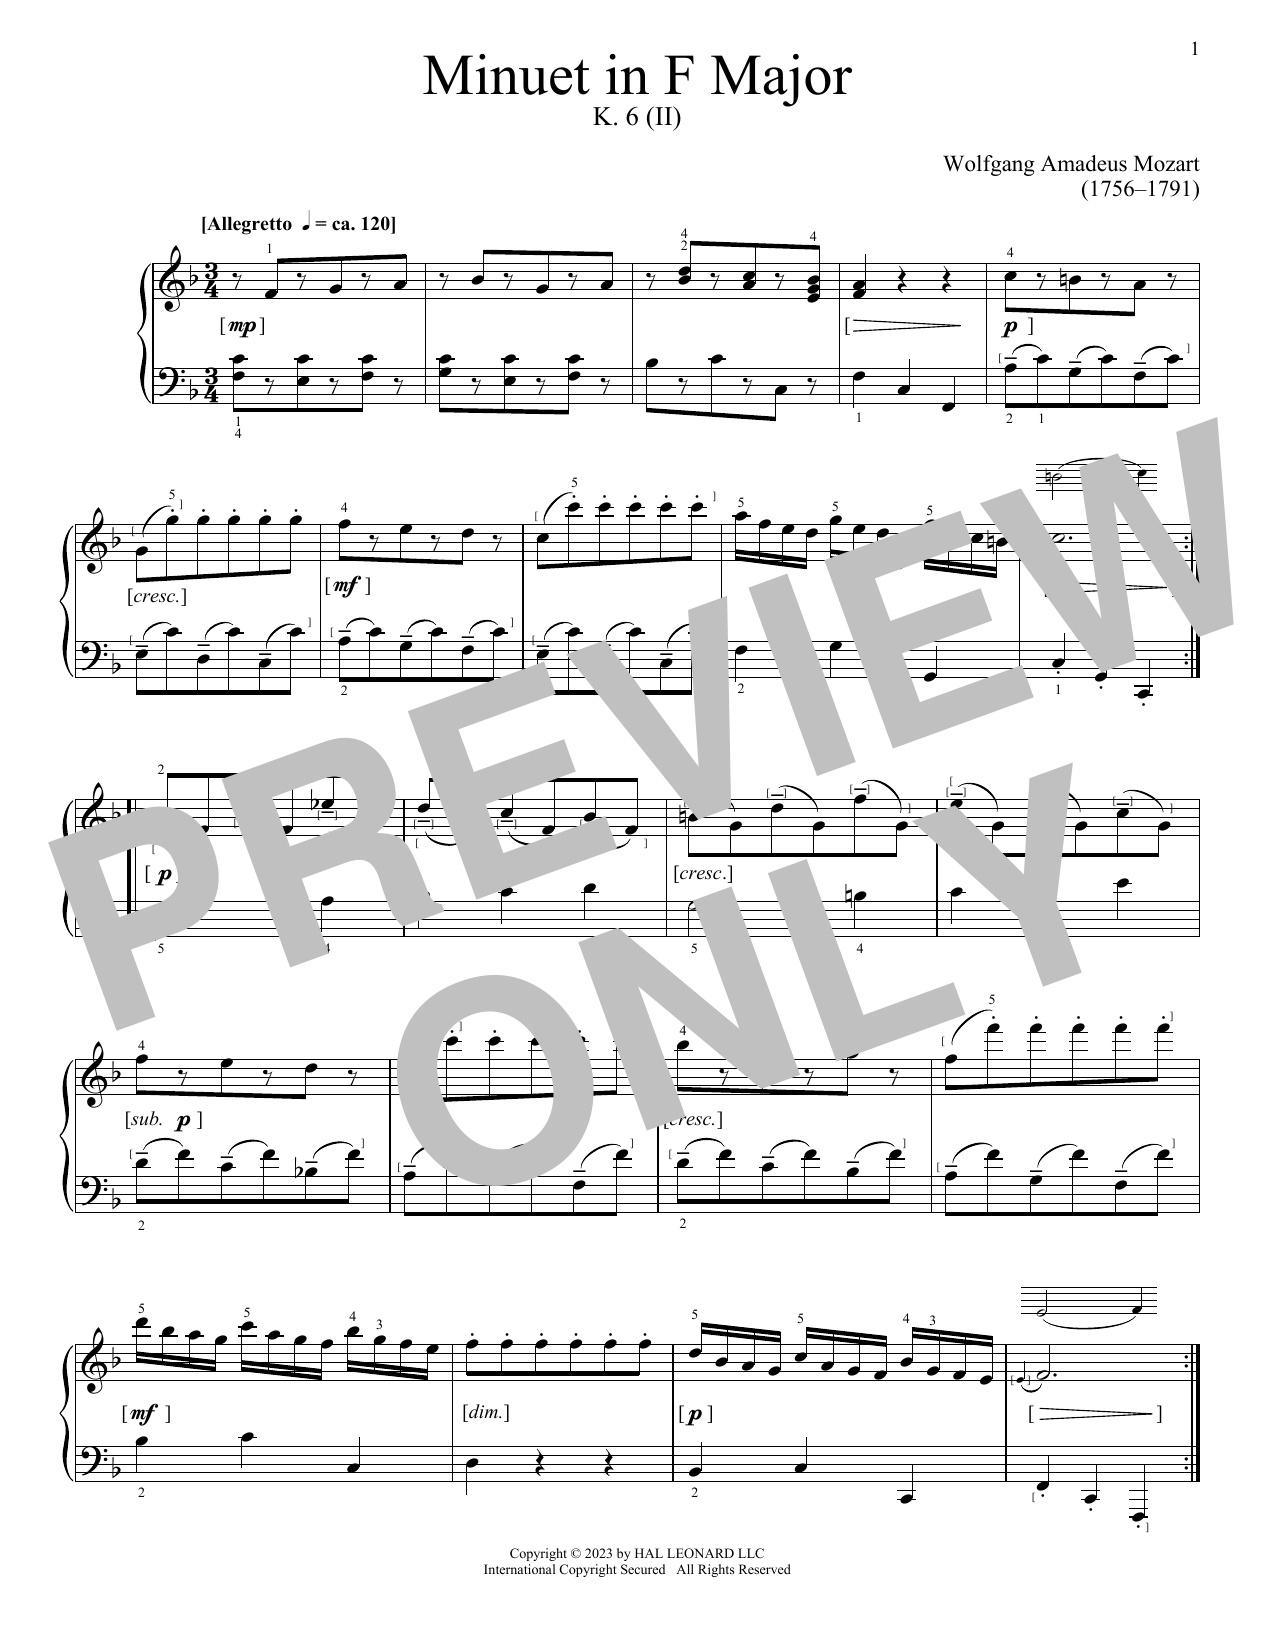 Download Wolfgang Amadeus Mozart Minuet in F Major, K. 6 (II) Sheet Music